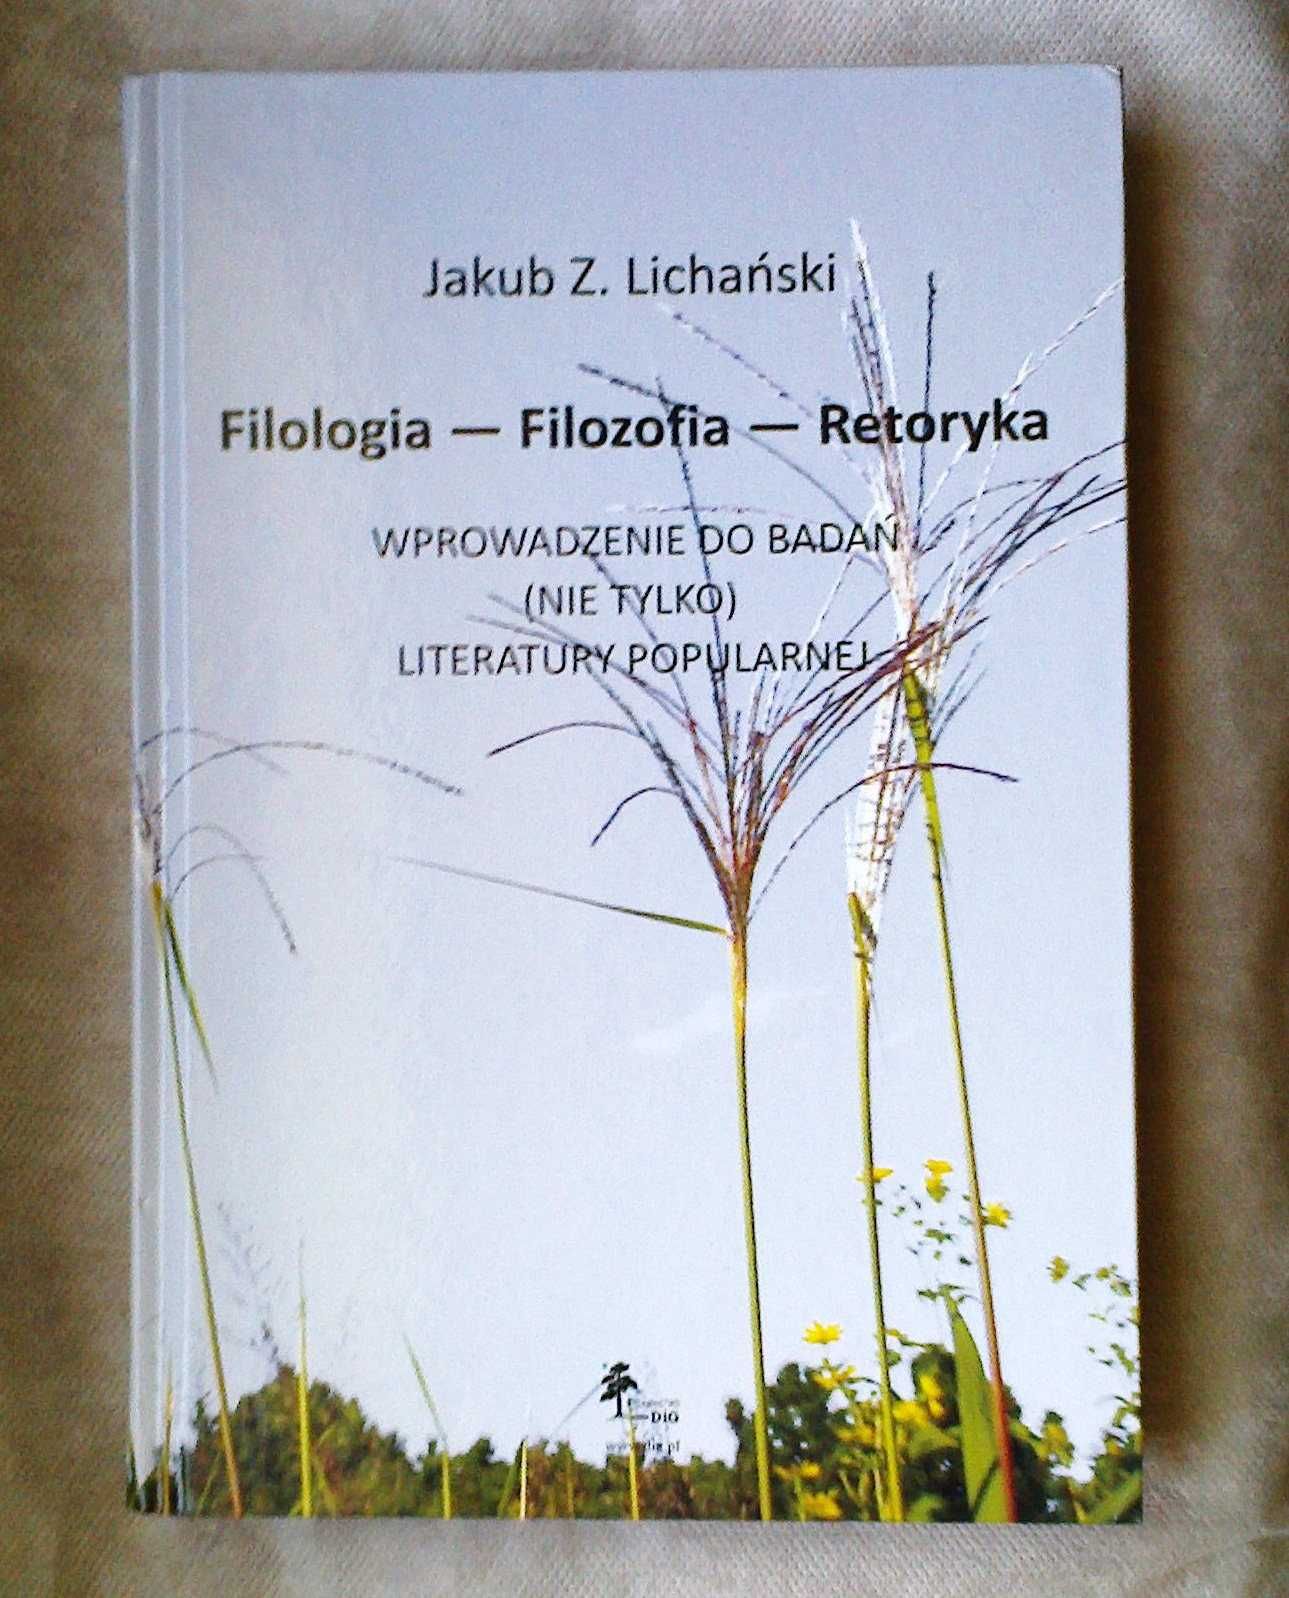 Jakub Z. Lichański, Filologia - Filozofia - Retoryka